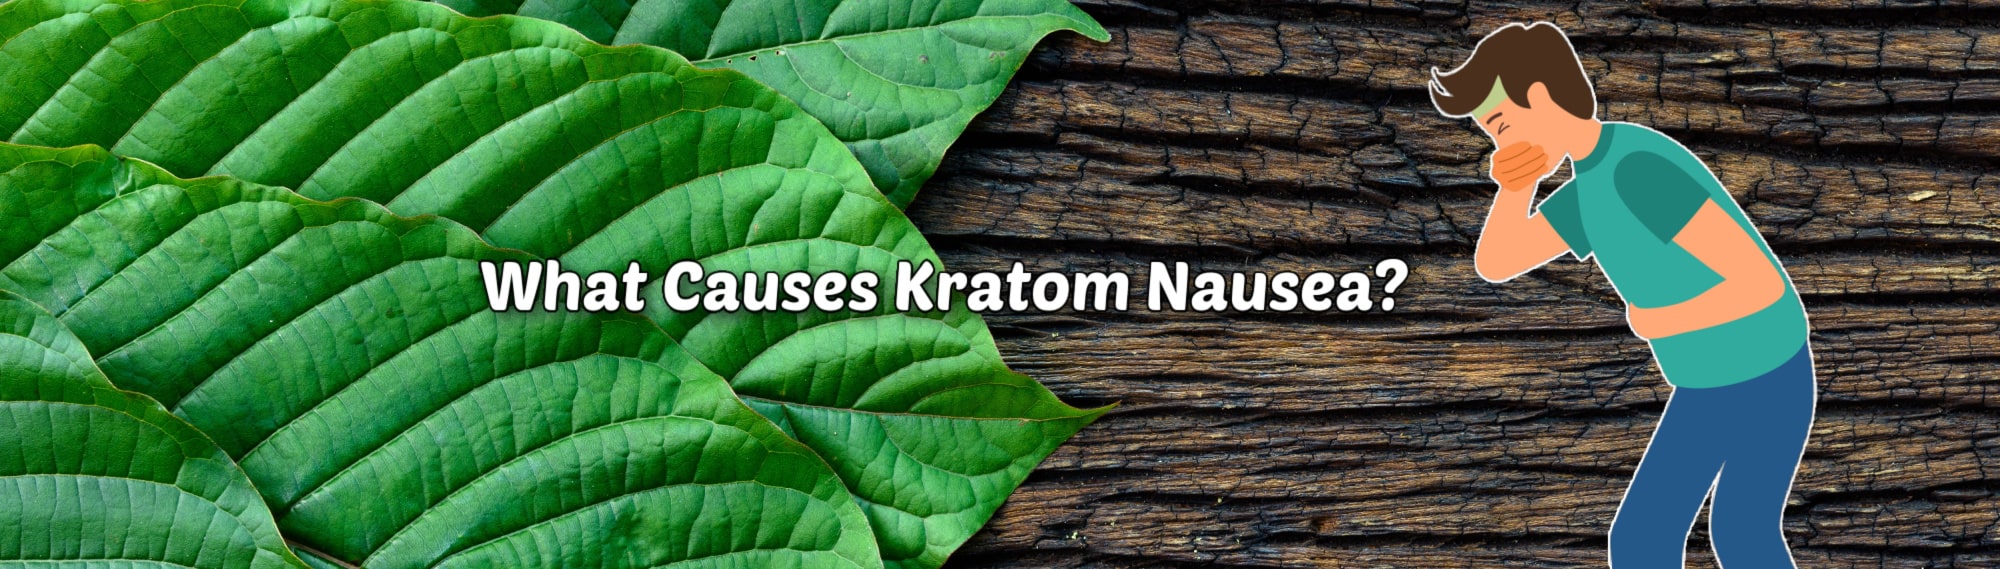 image of what causes kratom nausea